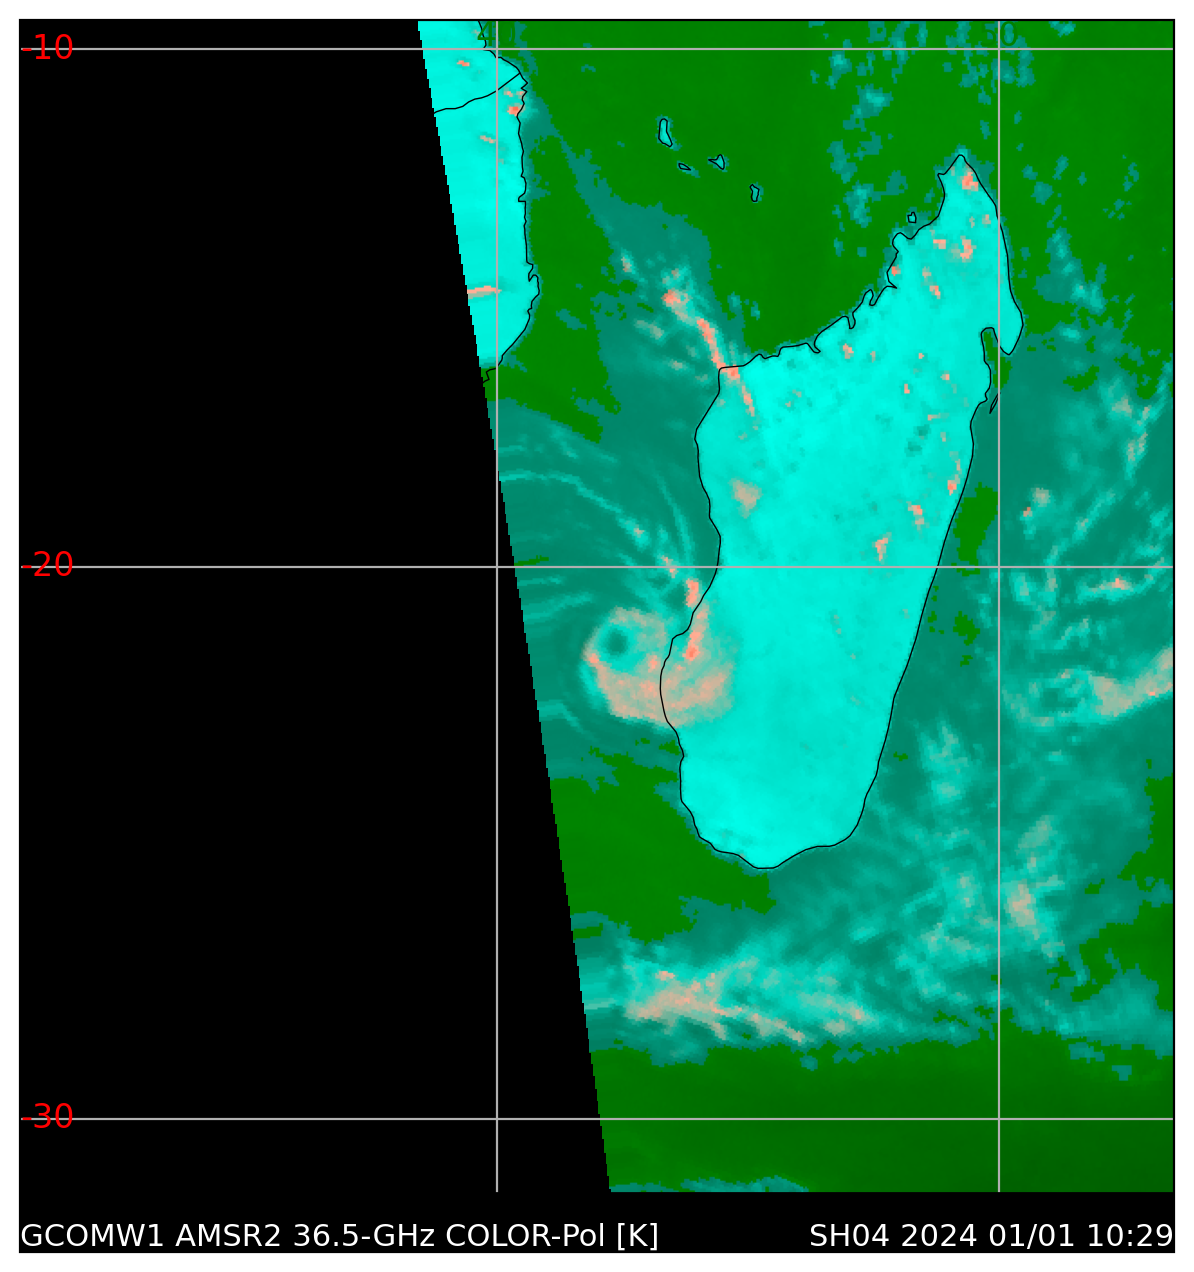 TC 04S(ALVARO) making landfall near Morombe/Madagascar close to Typhoon Intensity// 0115utc